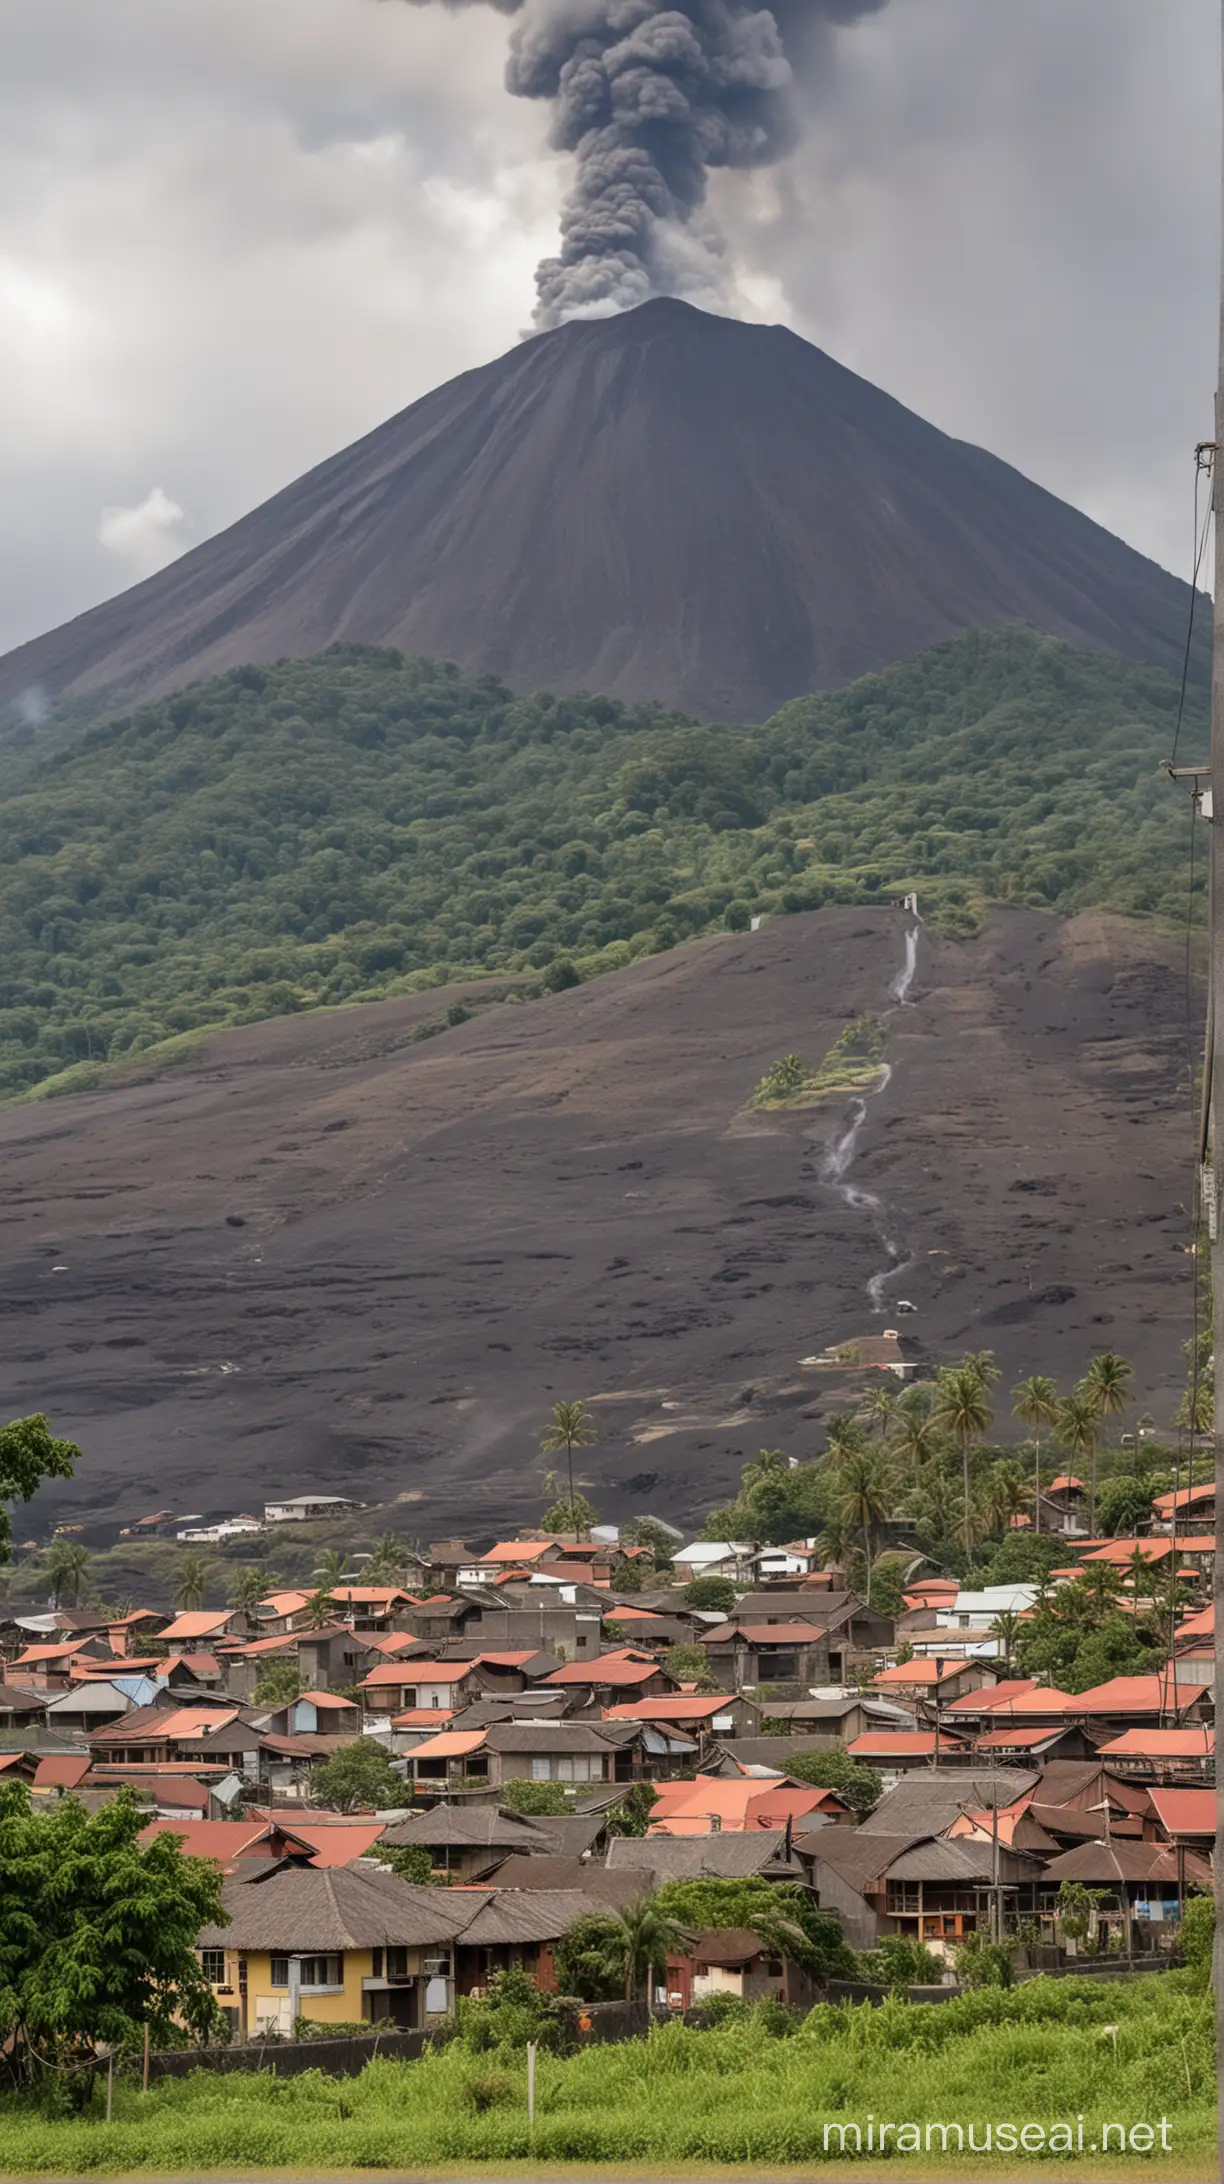 village close to an active volcano